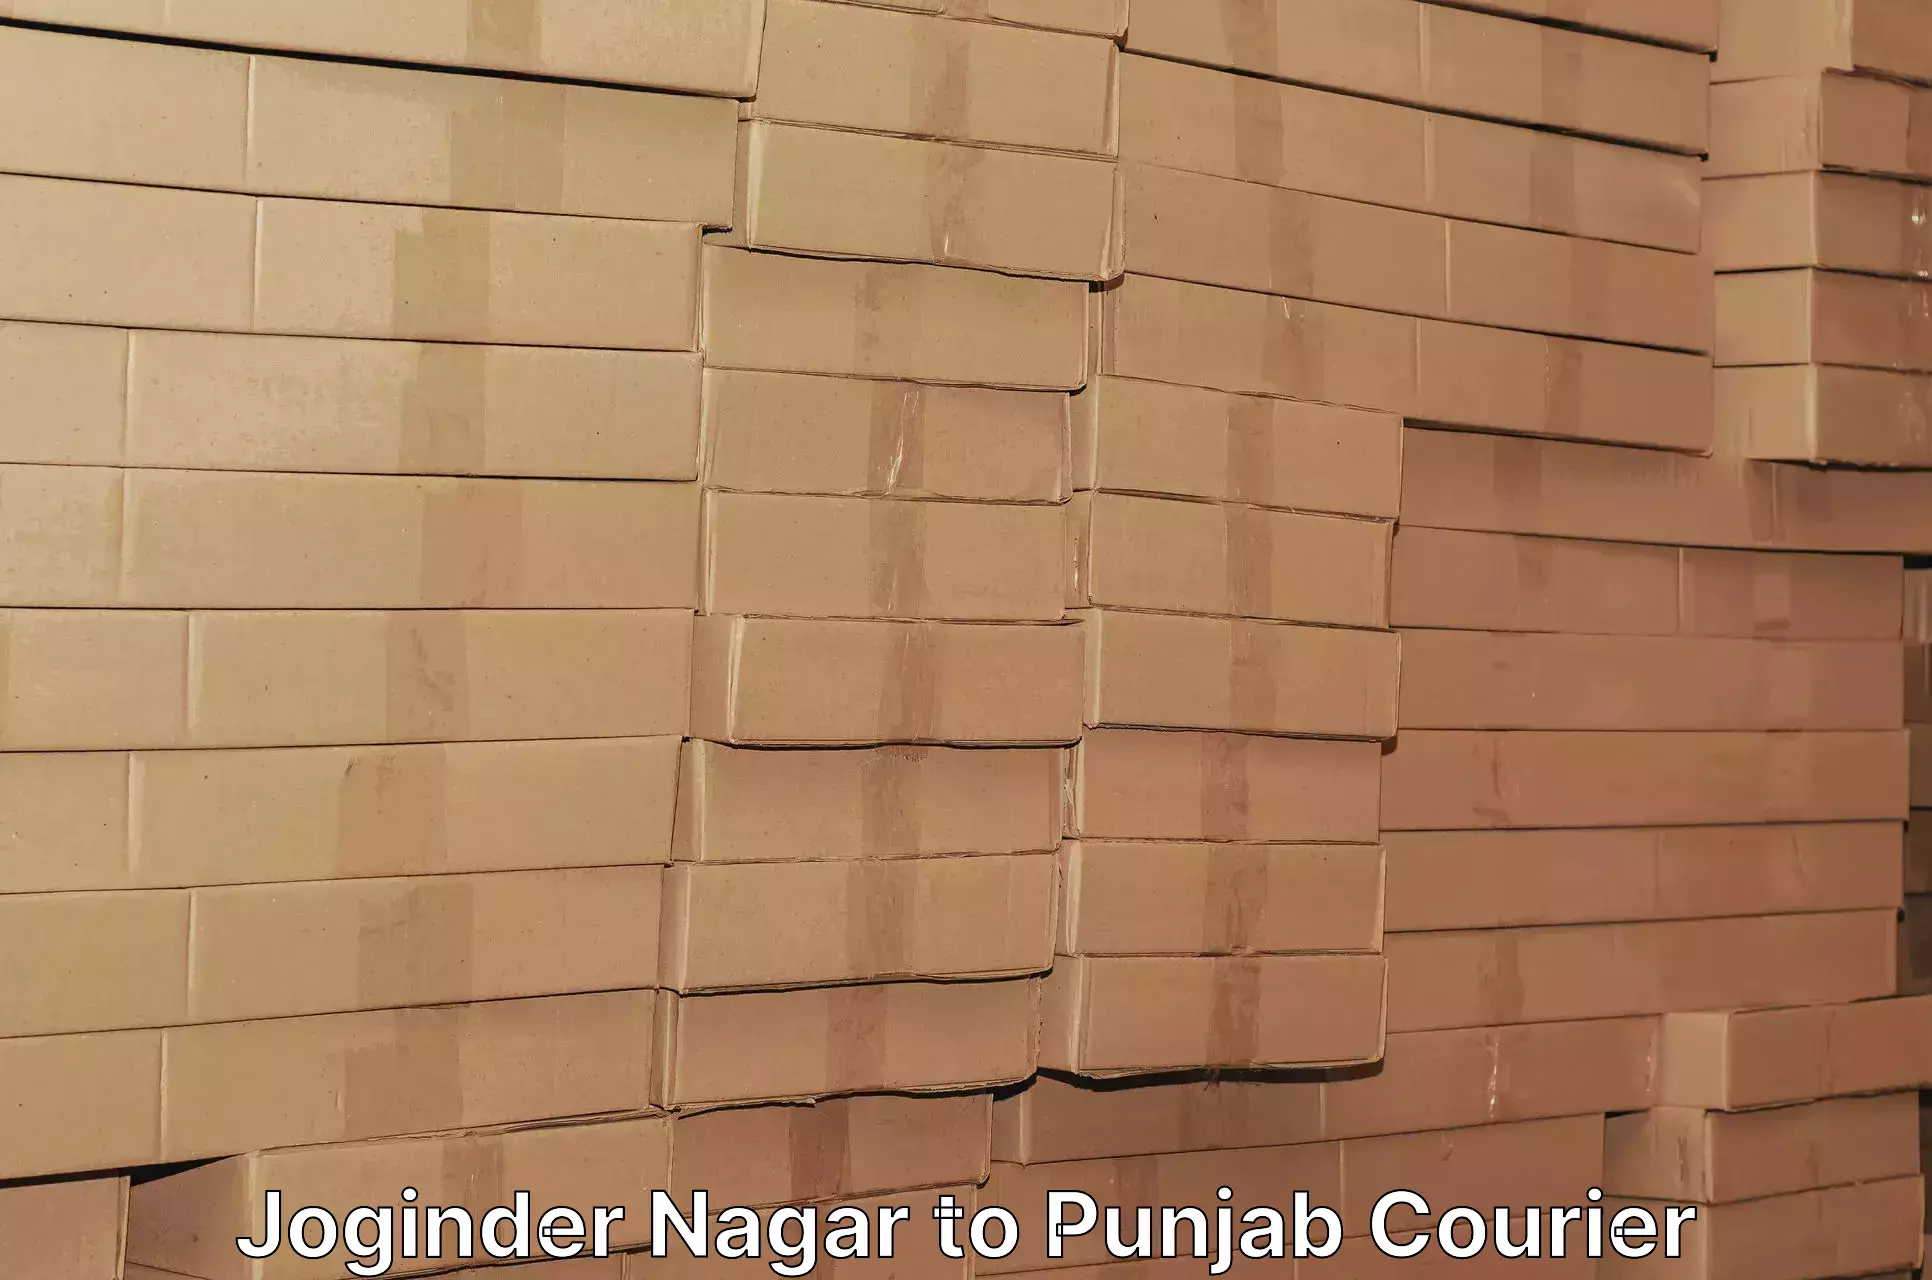 Courier service efficiency Joginder Nagar to Punjab